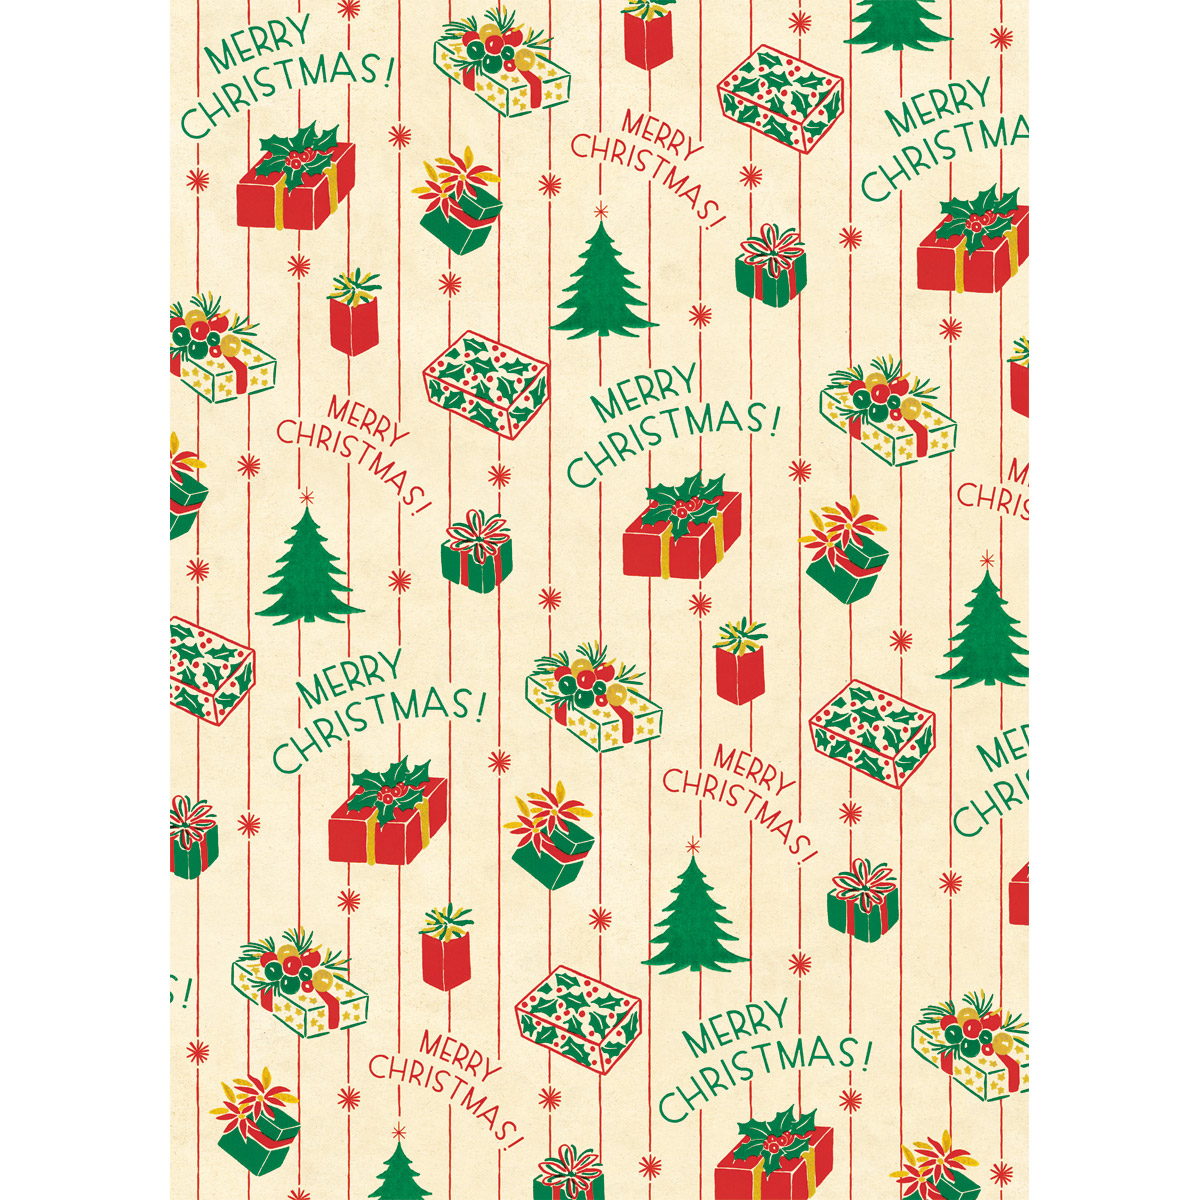 Hello Santa Christmas Wrap Crafting Mod Podge Paper Sheet_D